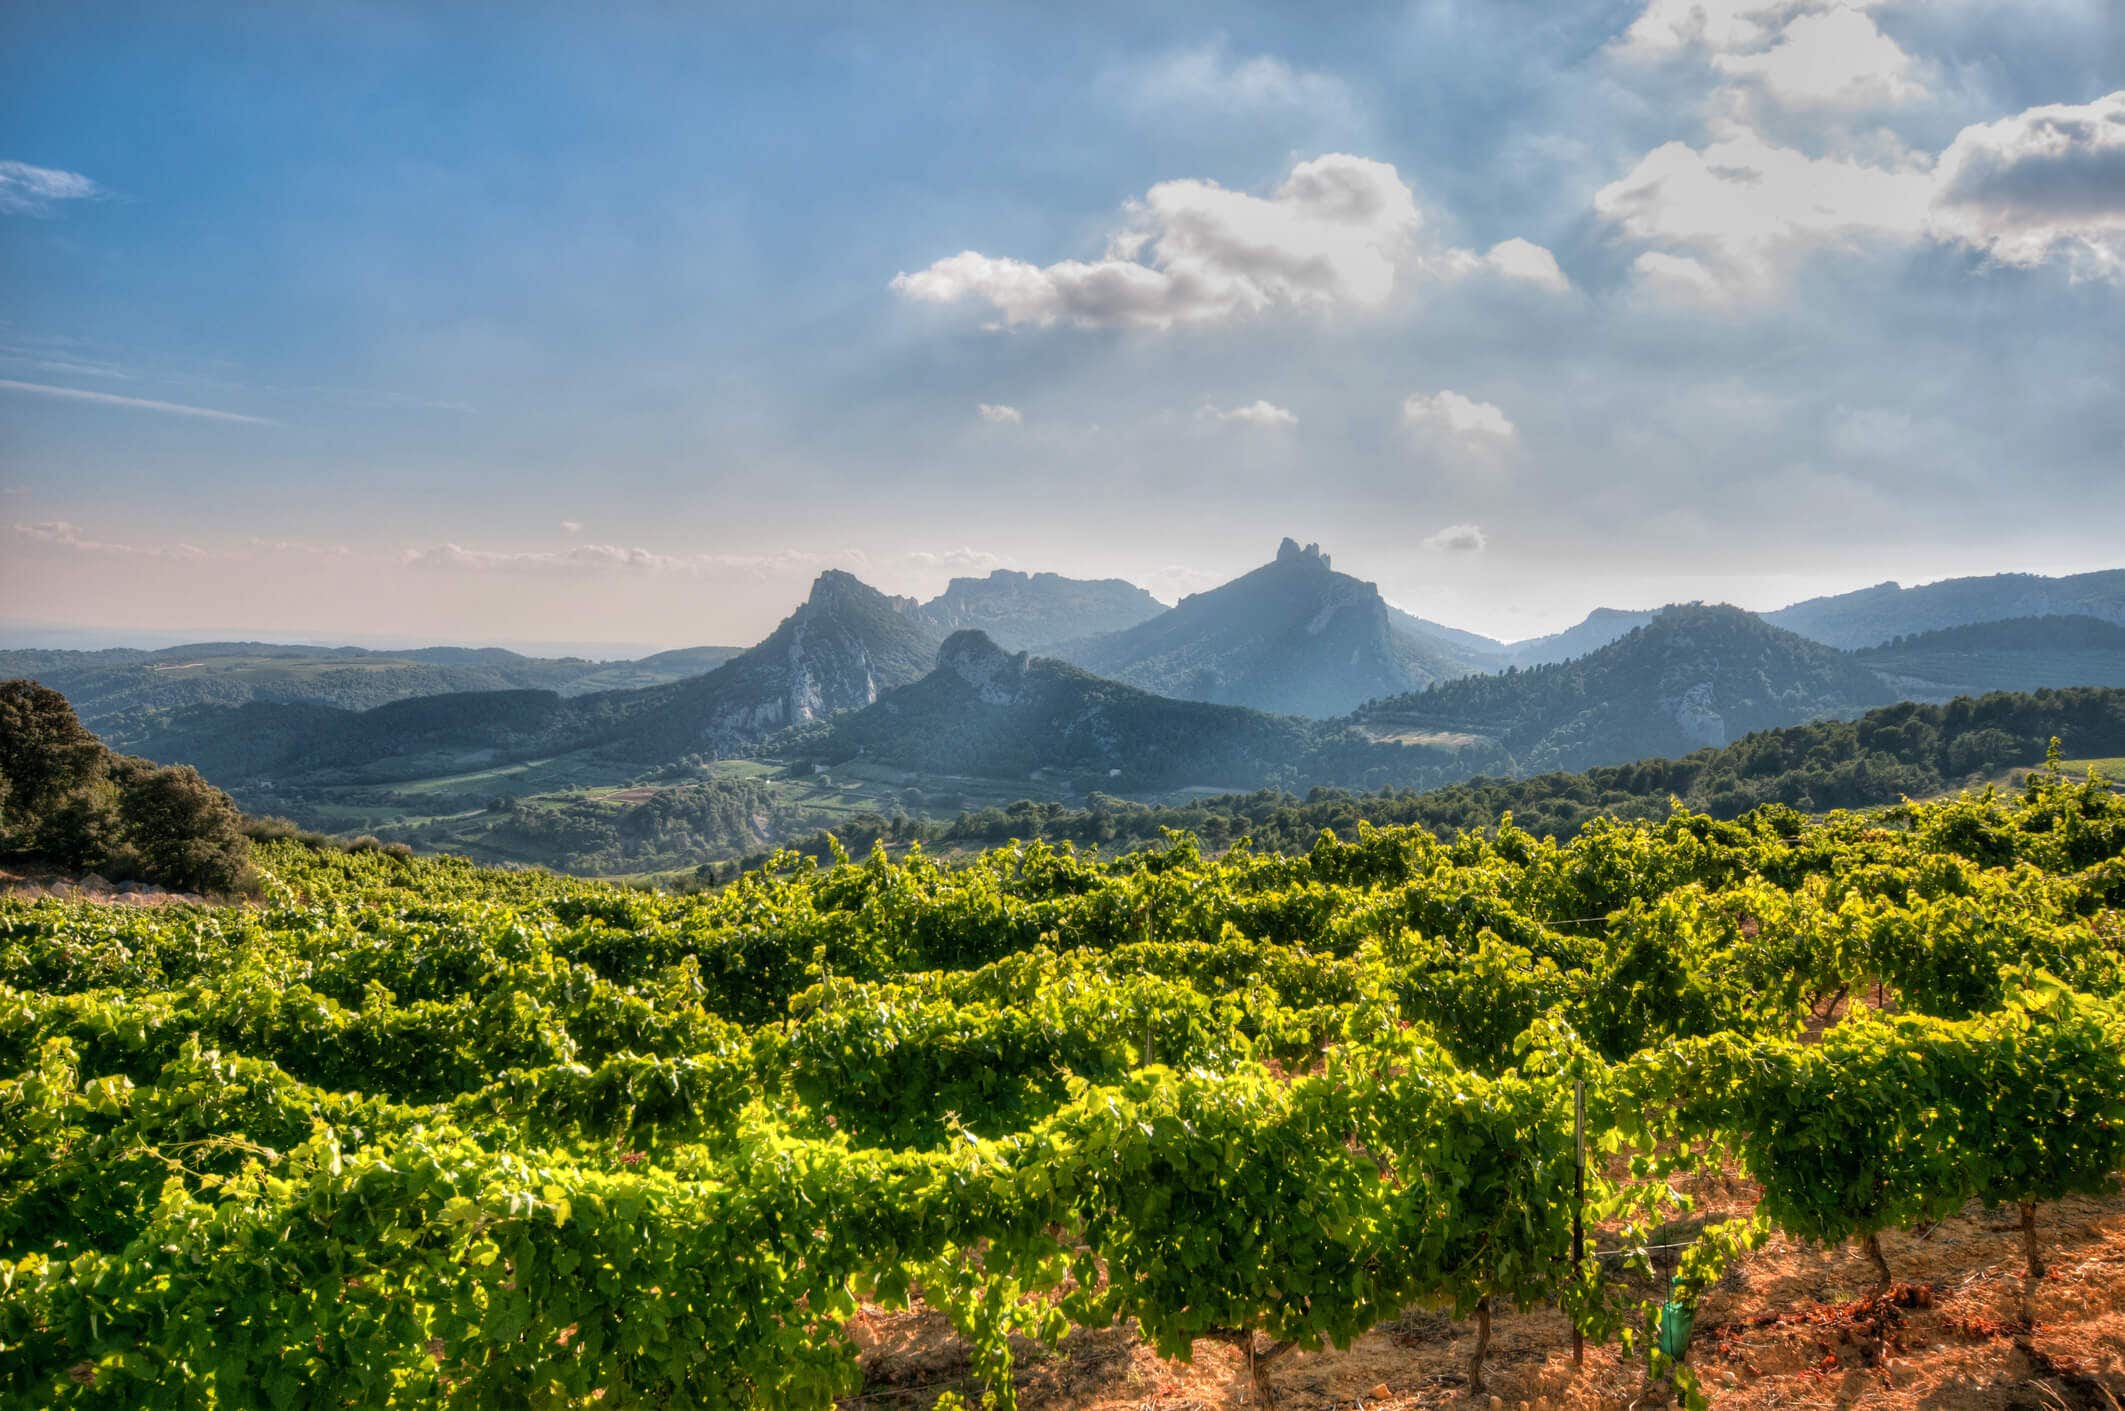 Vineyard in Suzette, France, at the foot of the Dentelles de Montmirail